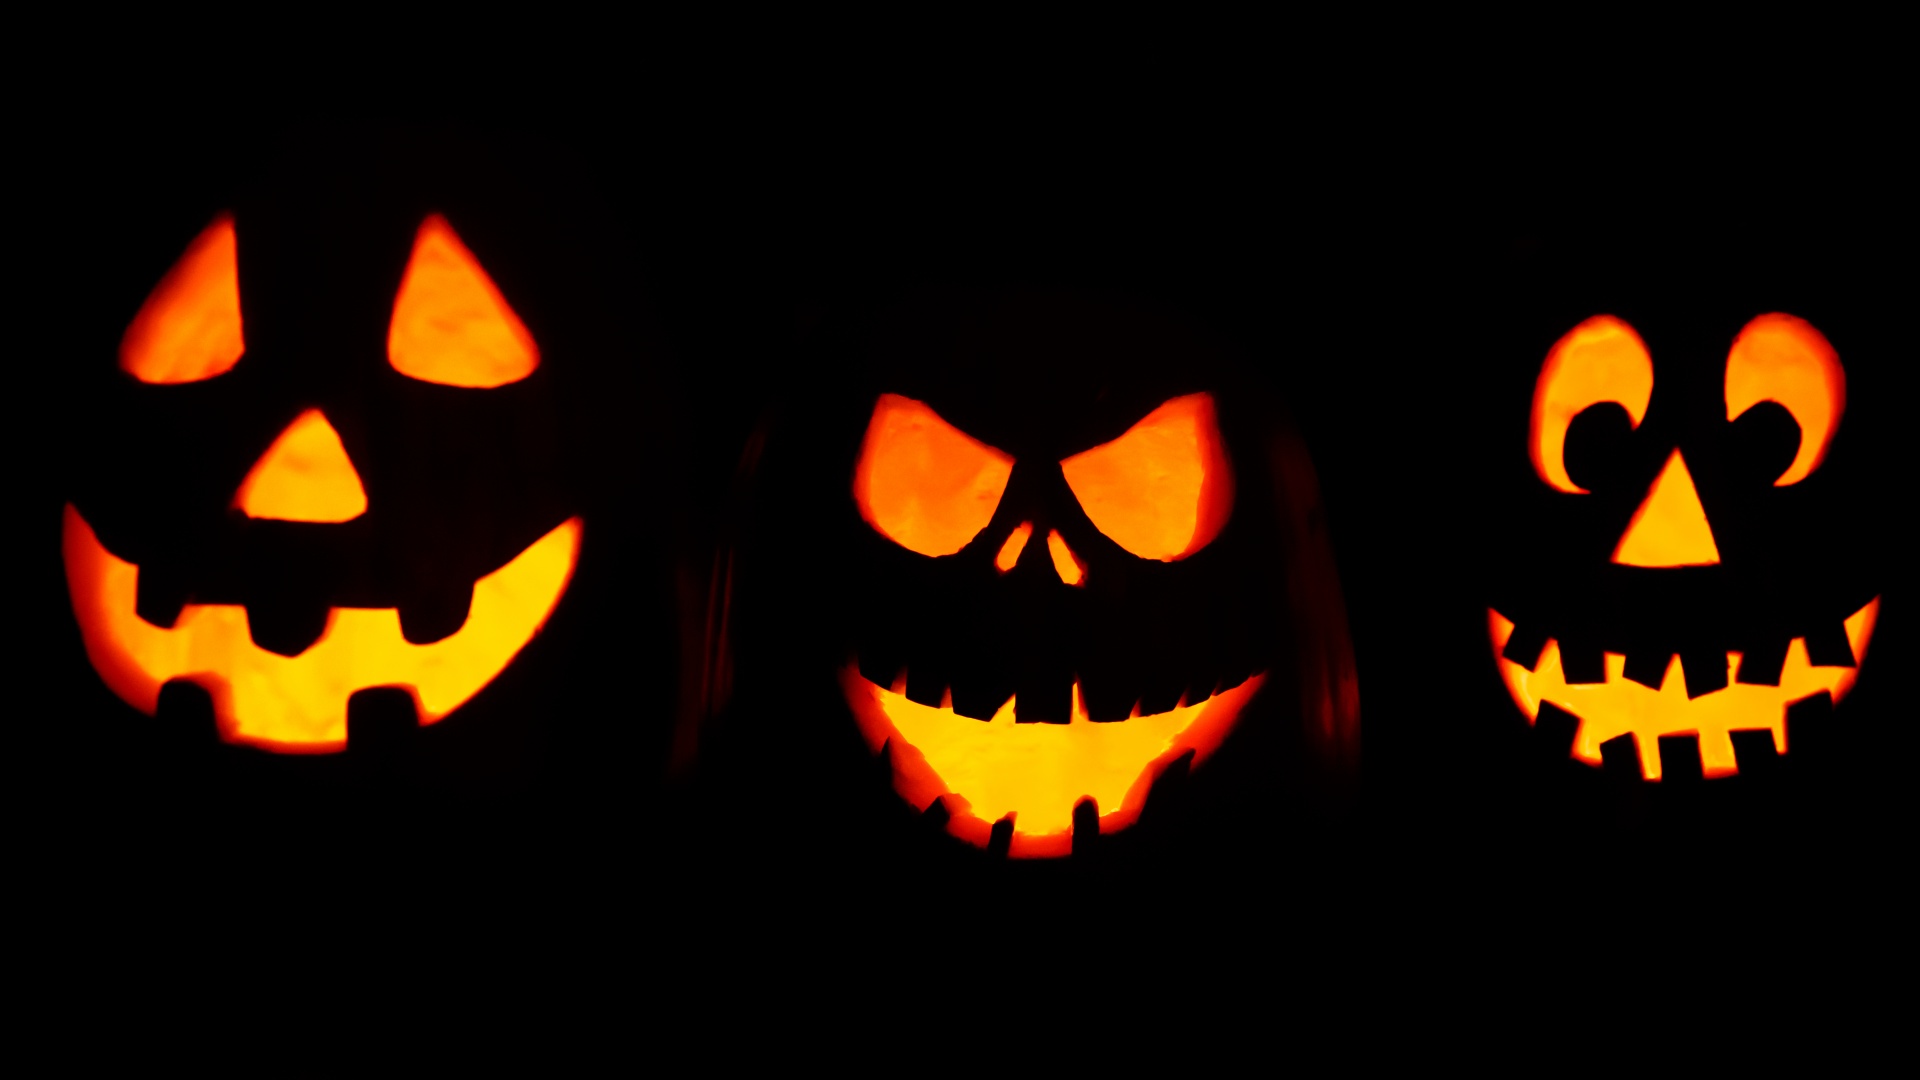 Halloween Pumpkin faces image